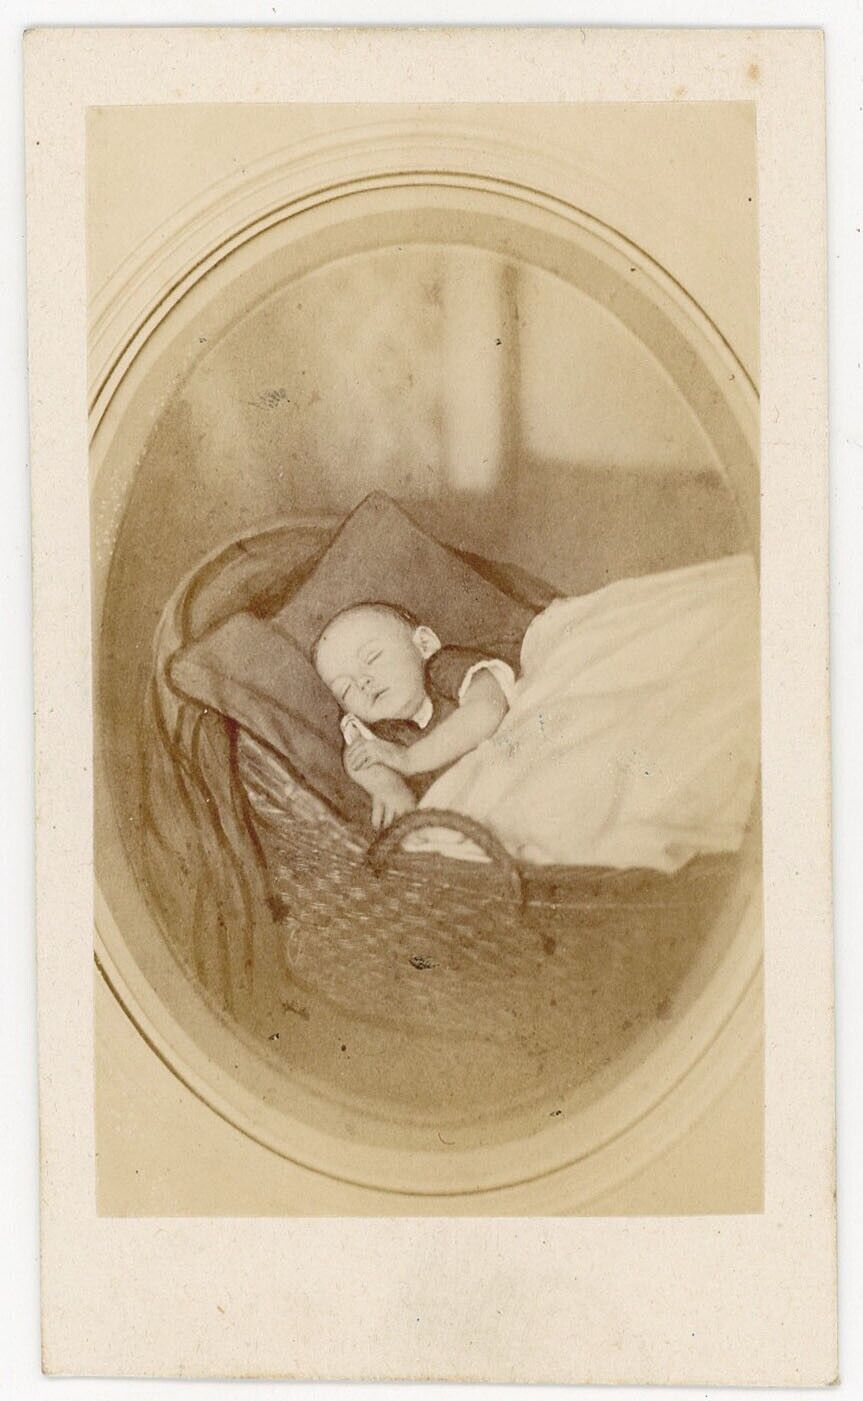 BABY IN ETERNAL SLEEP POSTMORTEM CDV PHOTO CIRCA 1870